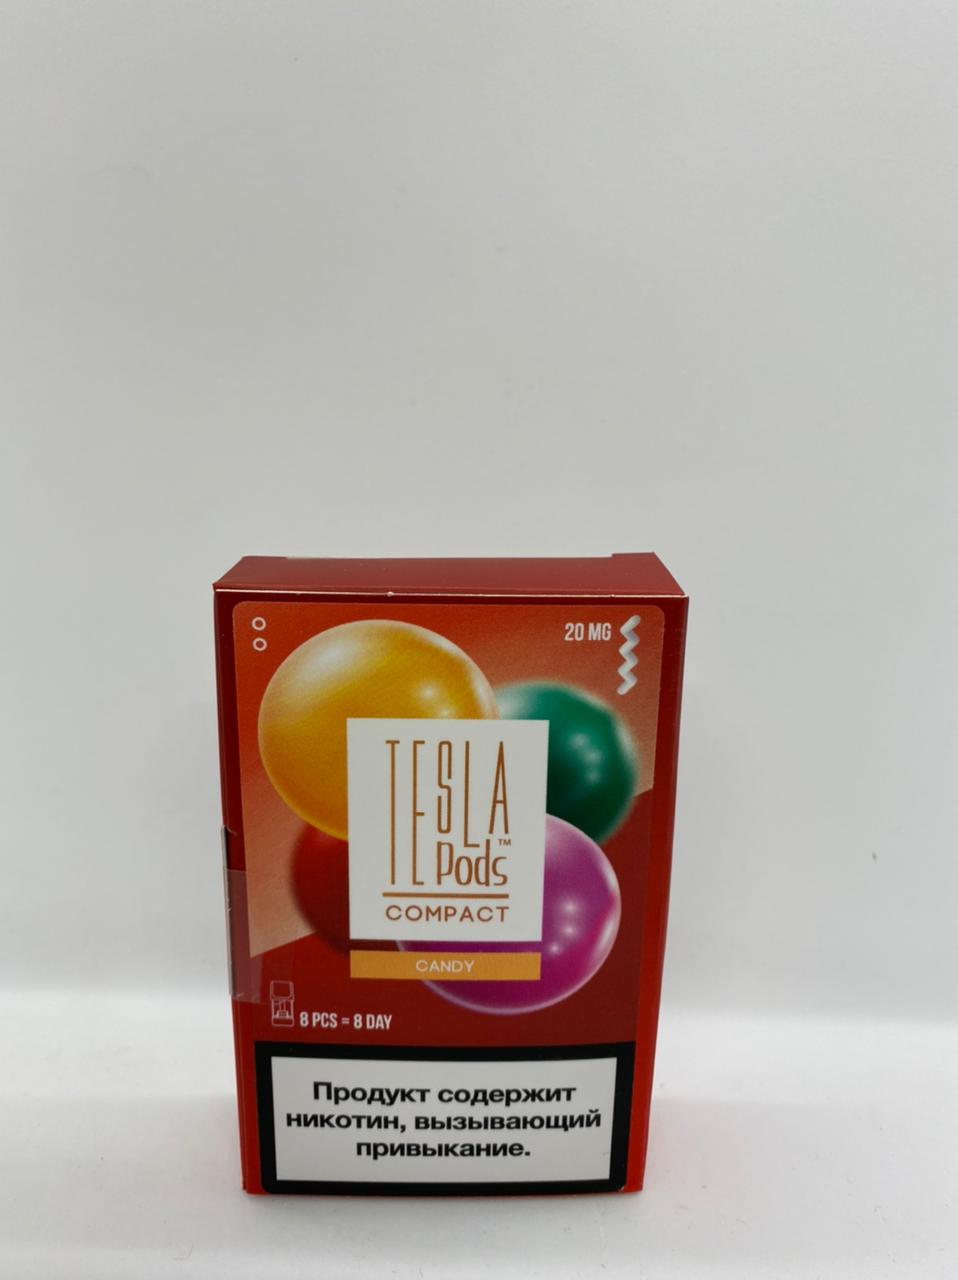 Набор TESLA pods Картридж Candy 2% (8 картриджей) compact для Logic